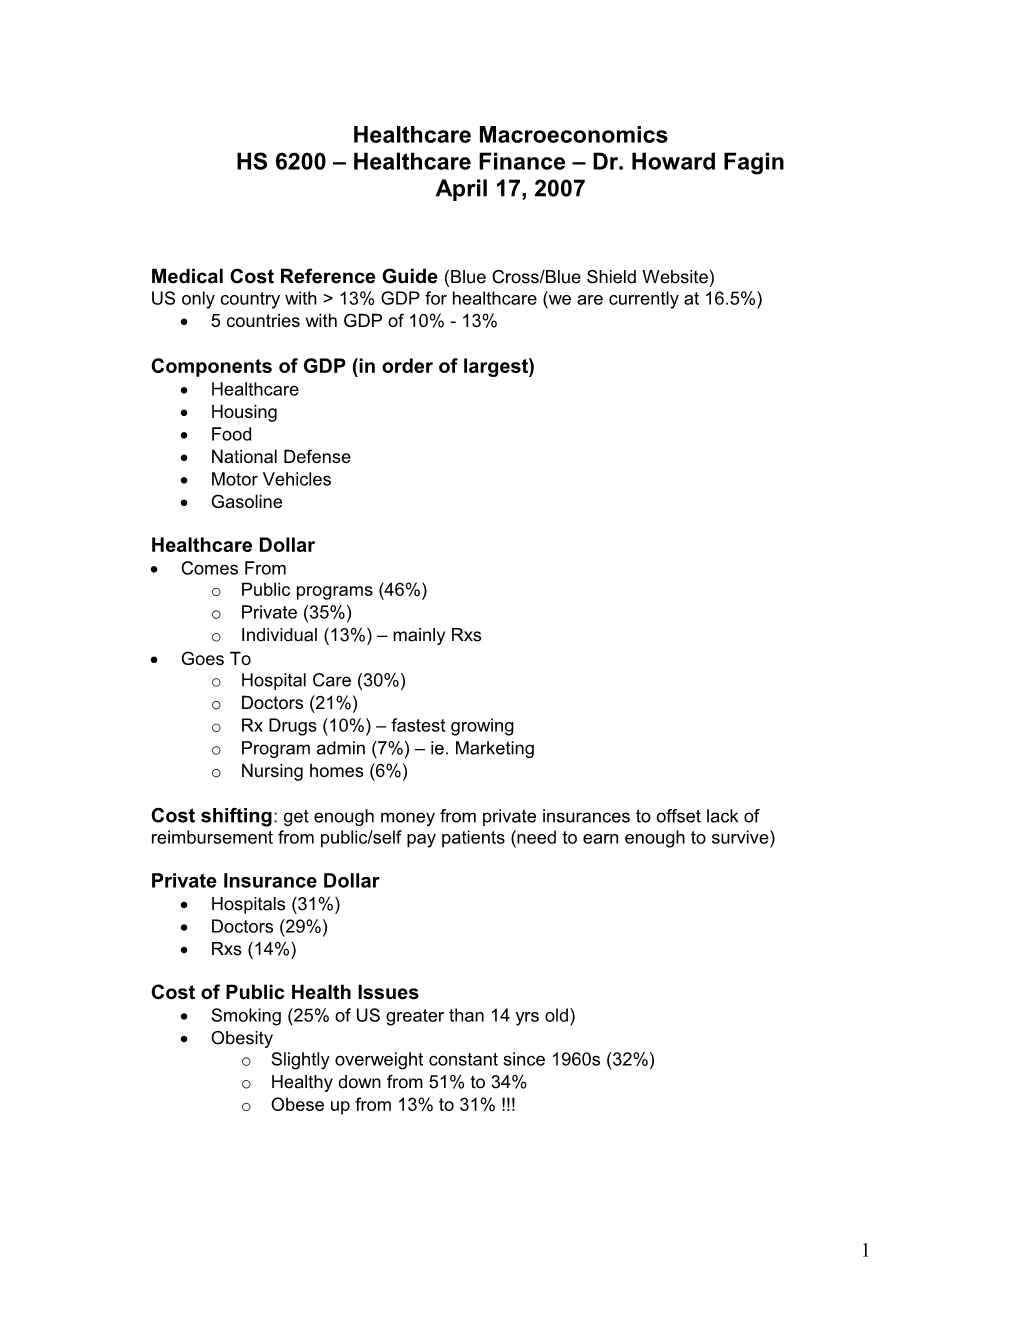 HS 6200 Healthcare Finance Dr. Howard Fagin